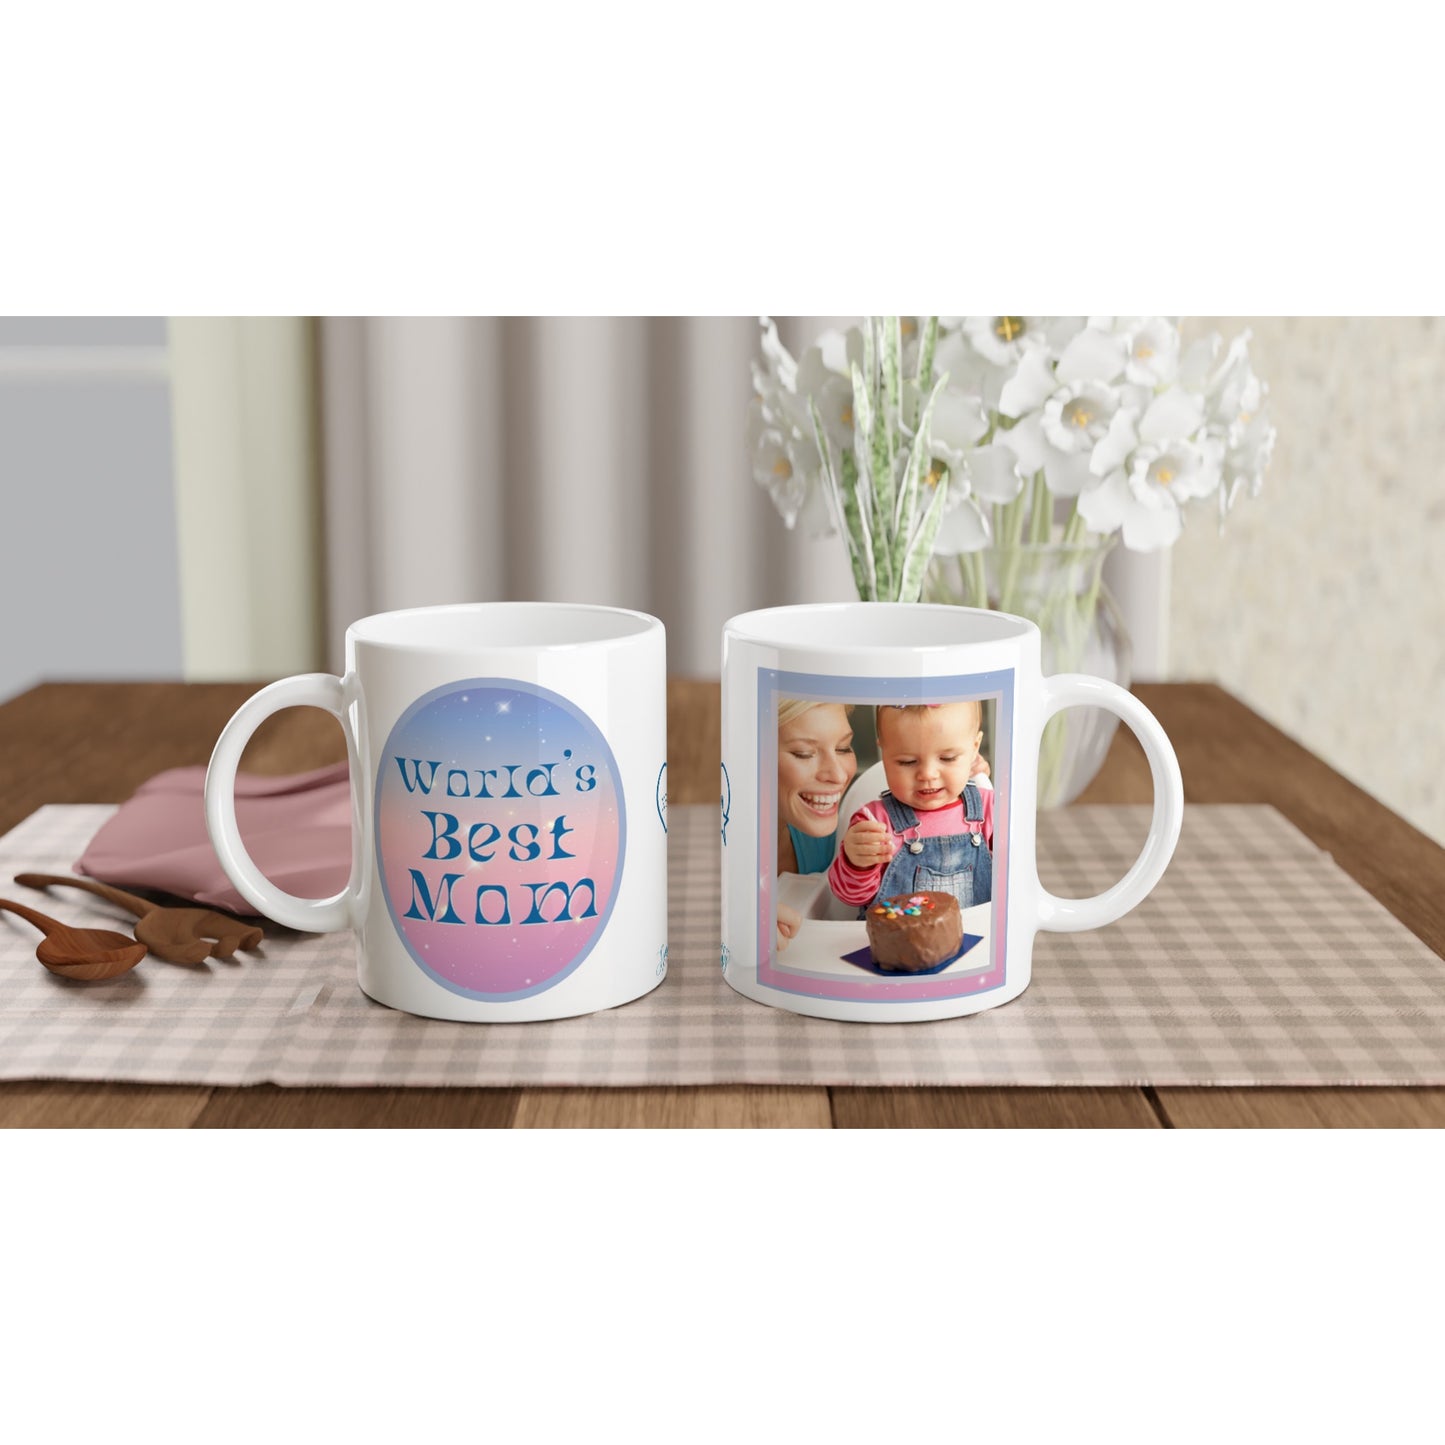 "World's Best Mom" Customizable Photo 11 oz. Mug  on table